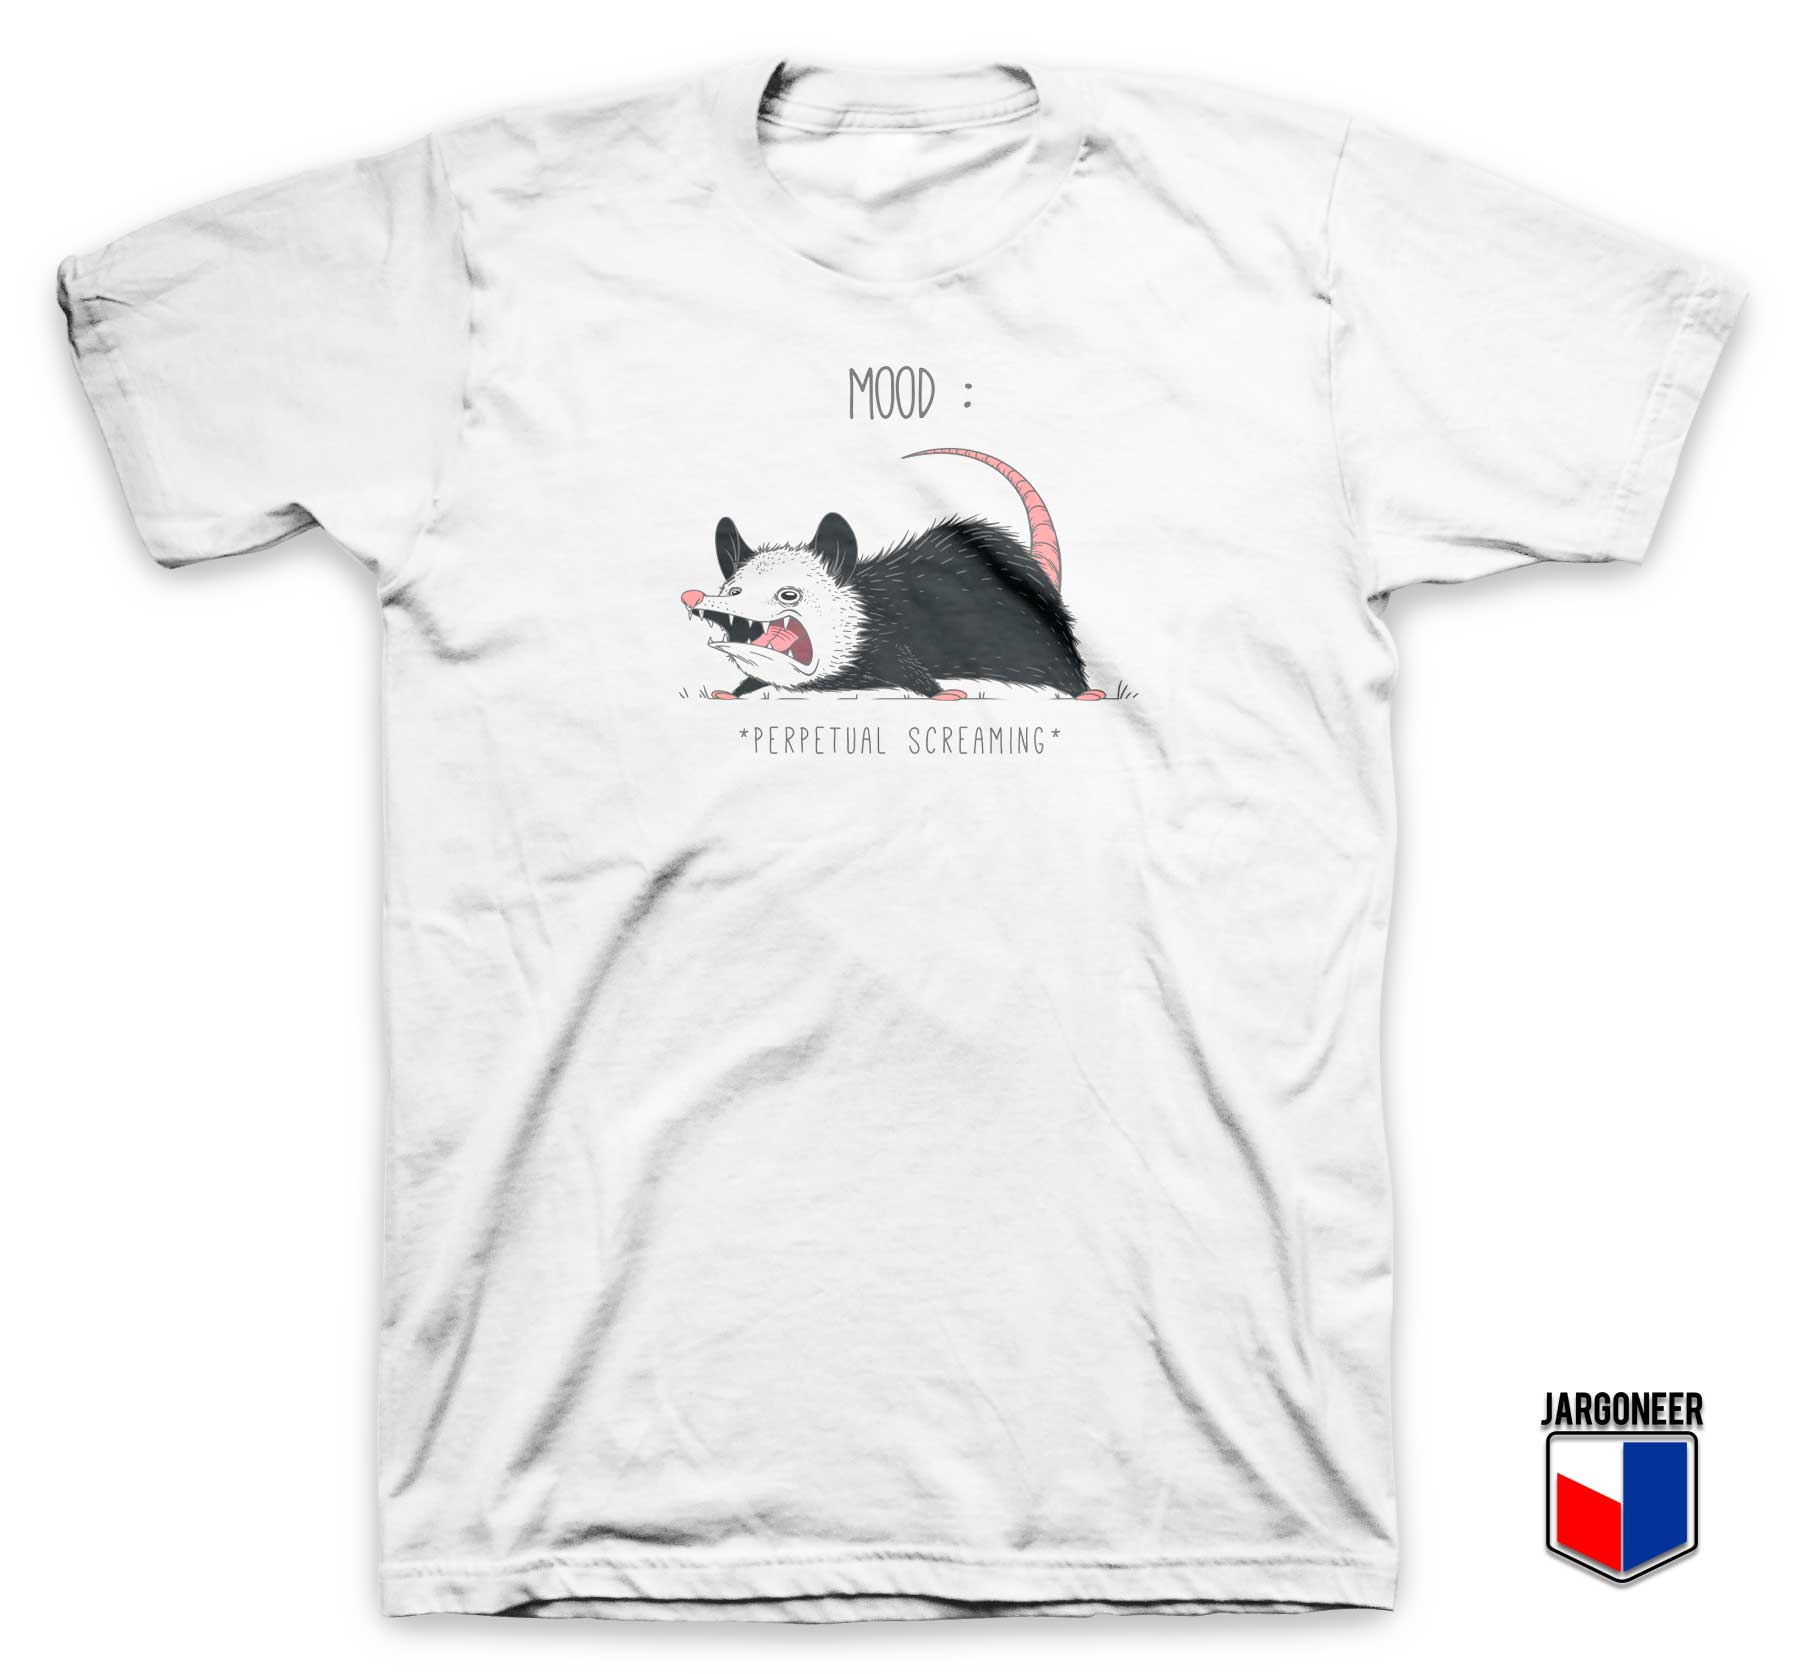 Mood Perpetual Screaming T Shirt - Shop Unique Graphic Cool Shirt Designs